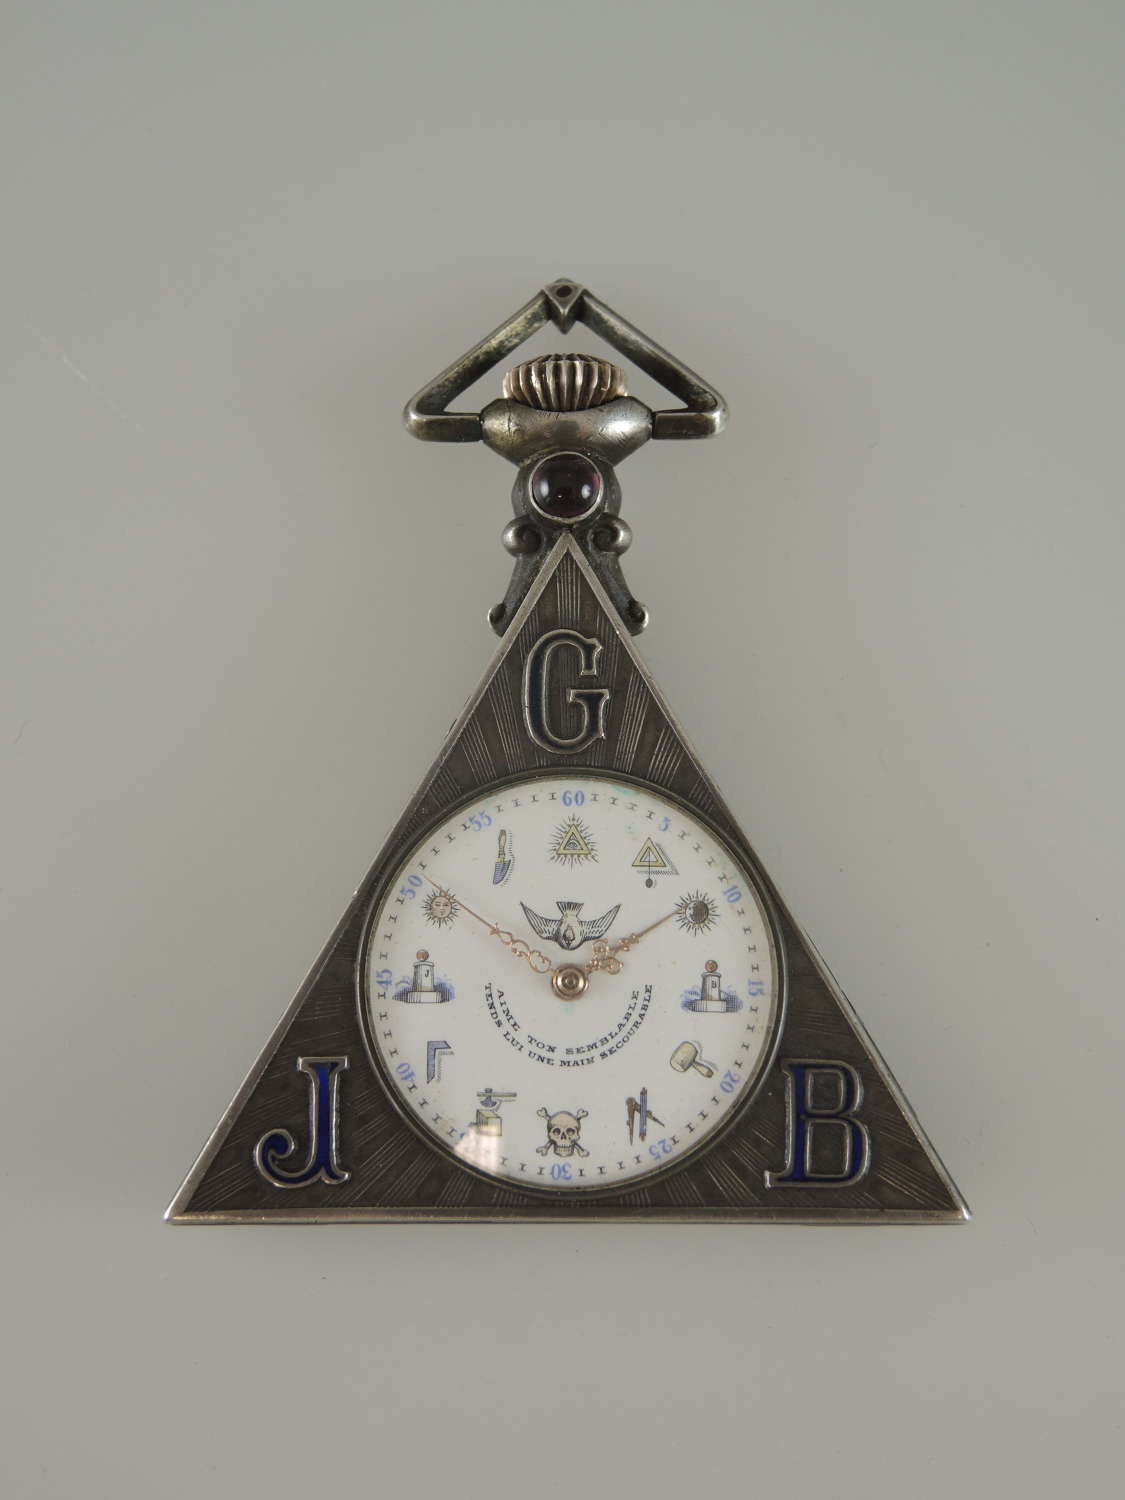 Original and rare silver and enamel Masonic pocket watch c1910